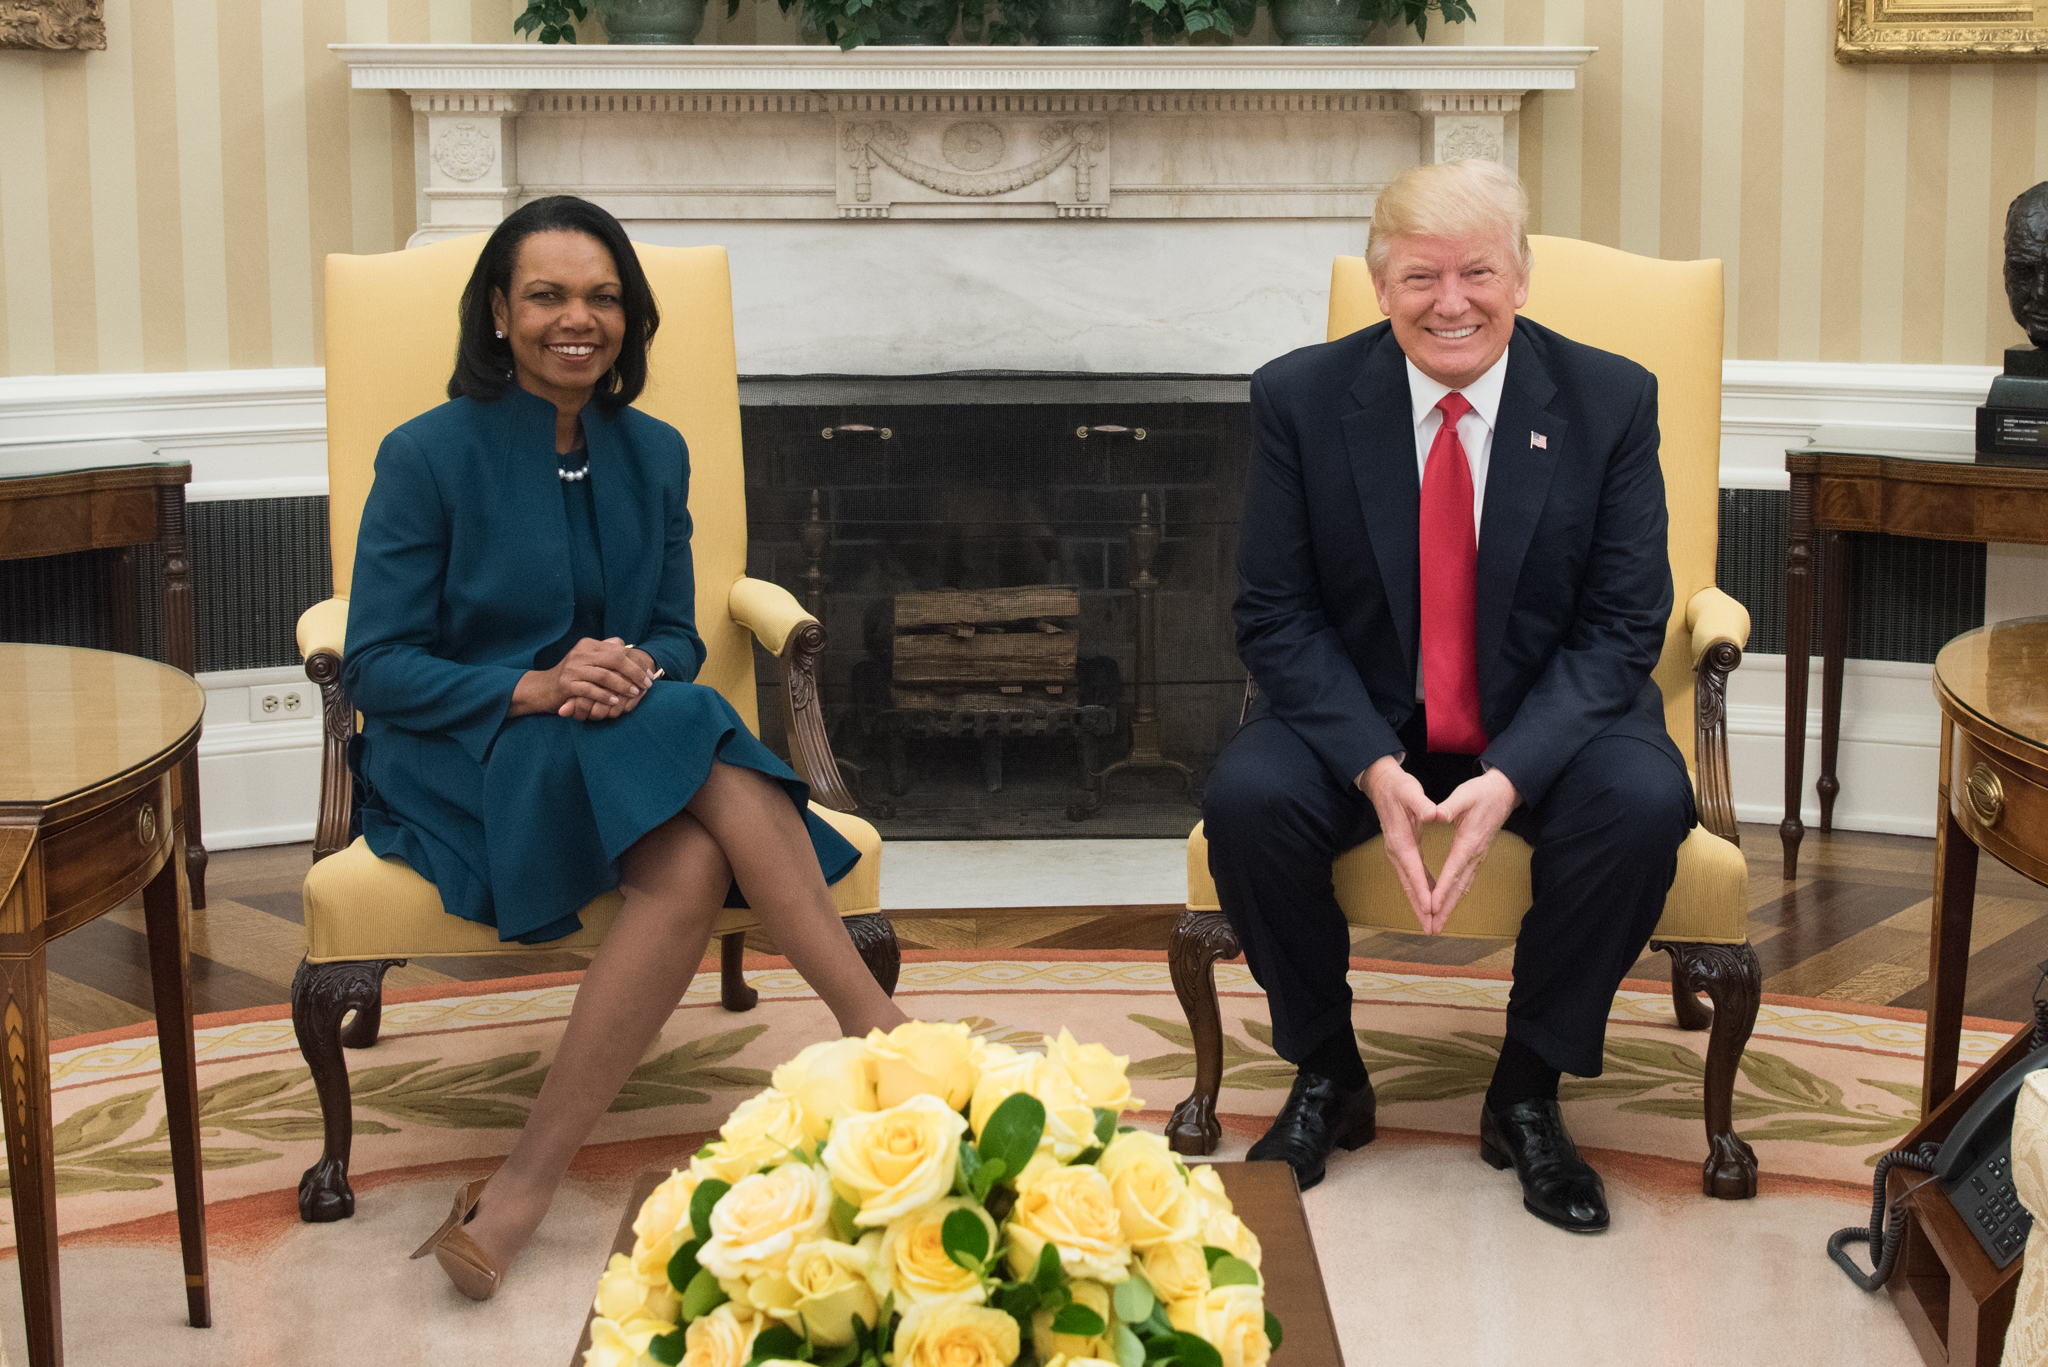 Condoleezza Rice and Donald Trump in the Oval Office, March 2017